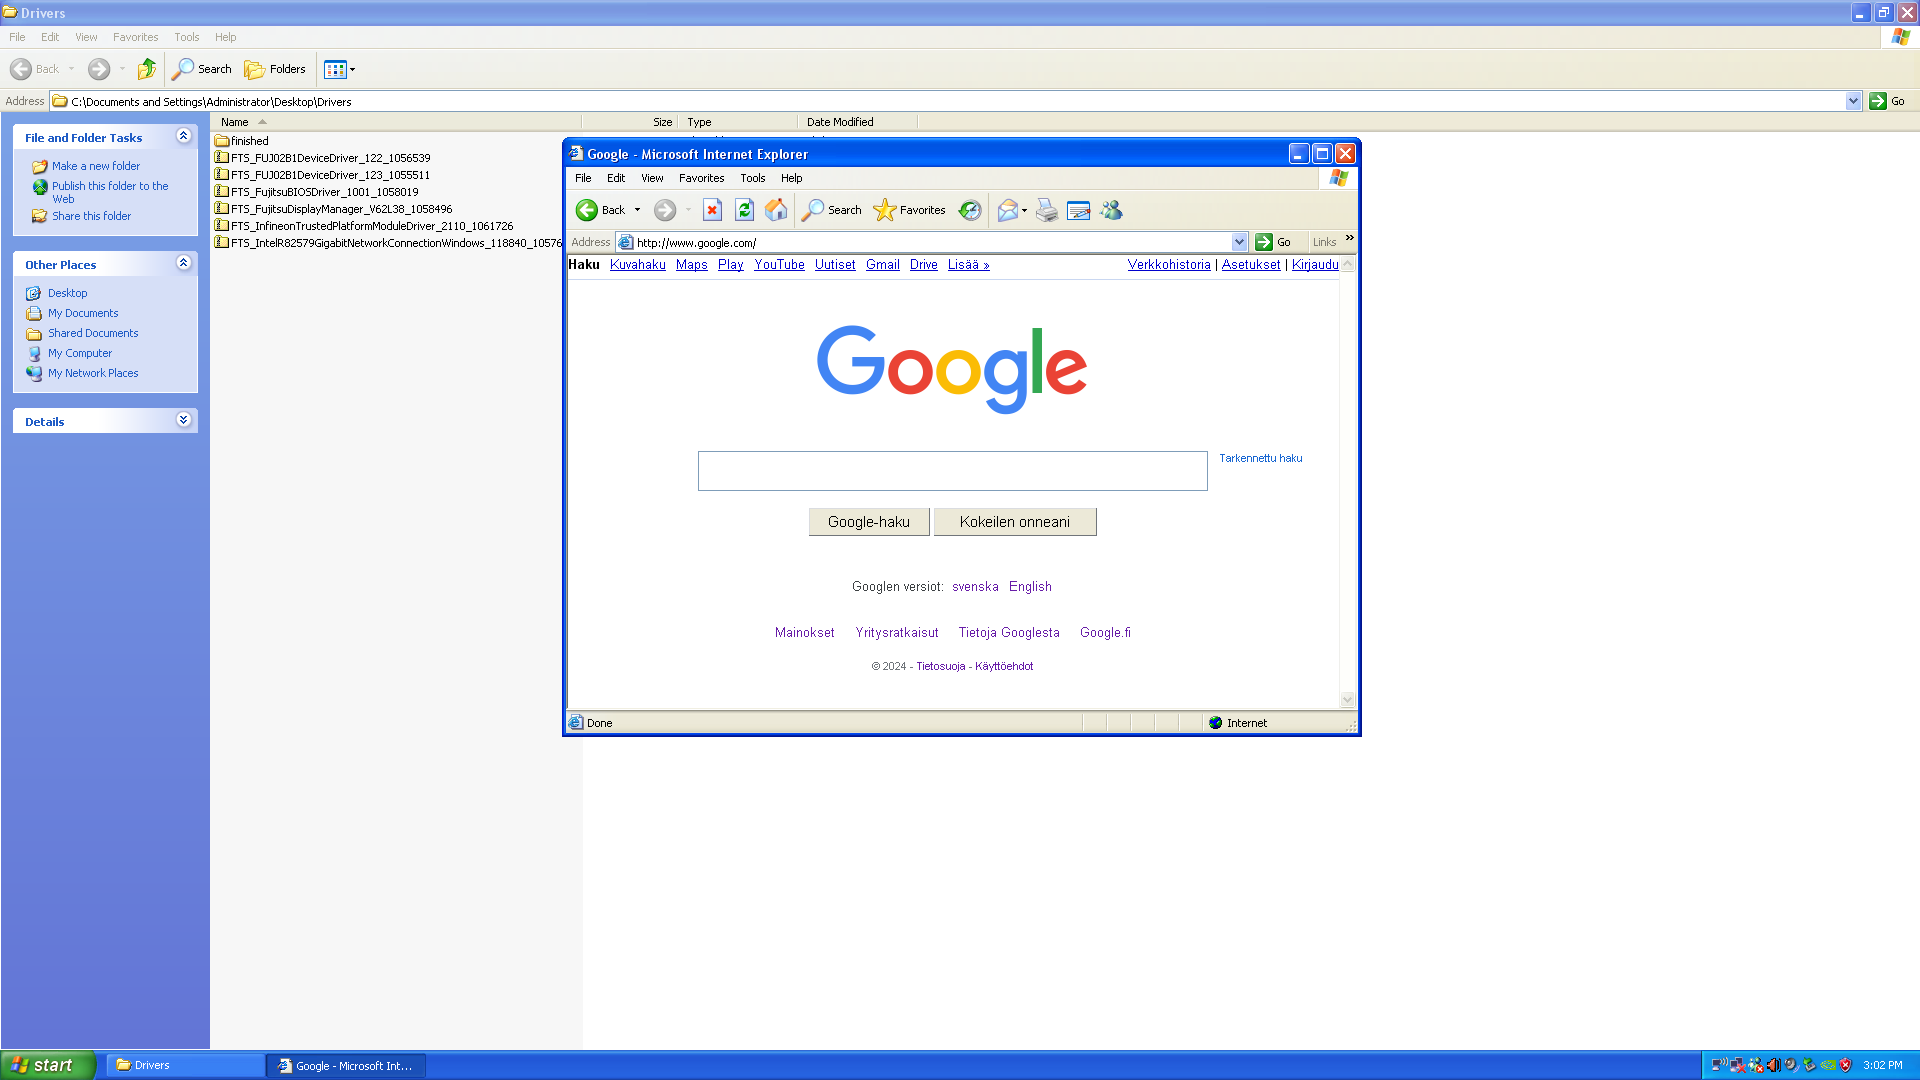 Google homepage on Internet Explorer 6.0